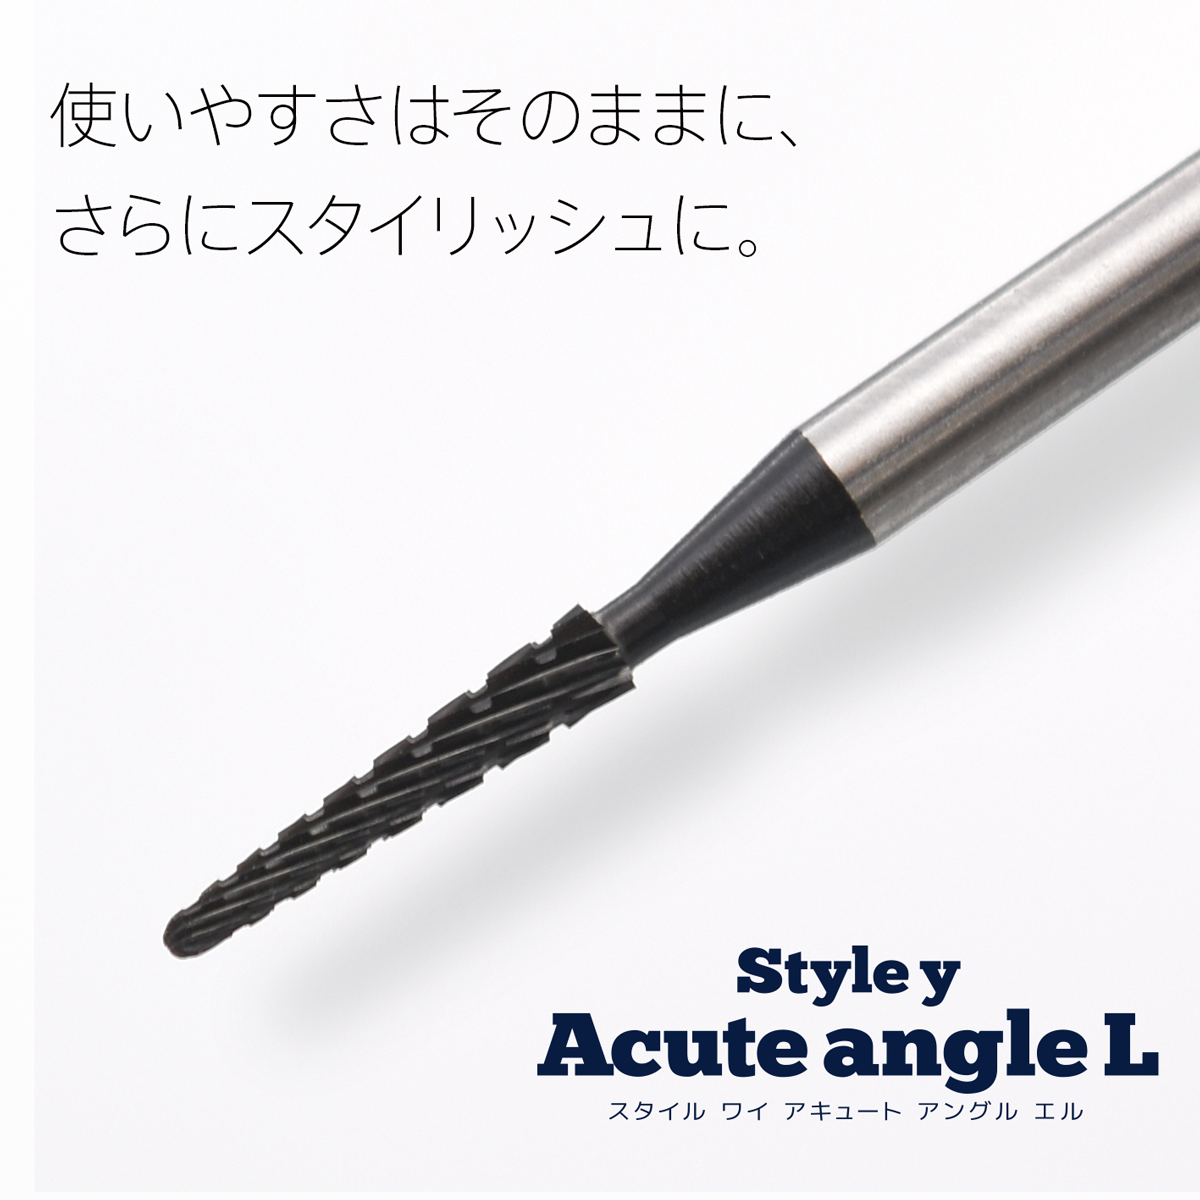 Acute angle L